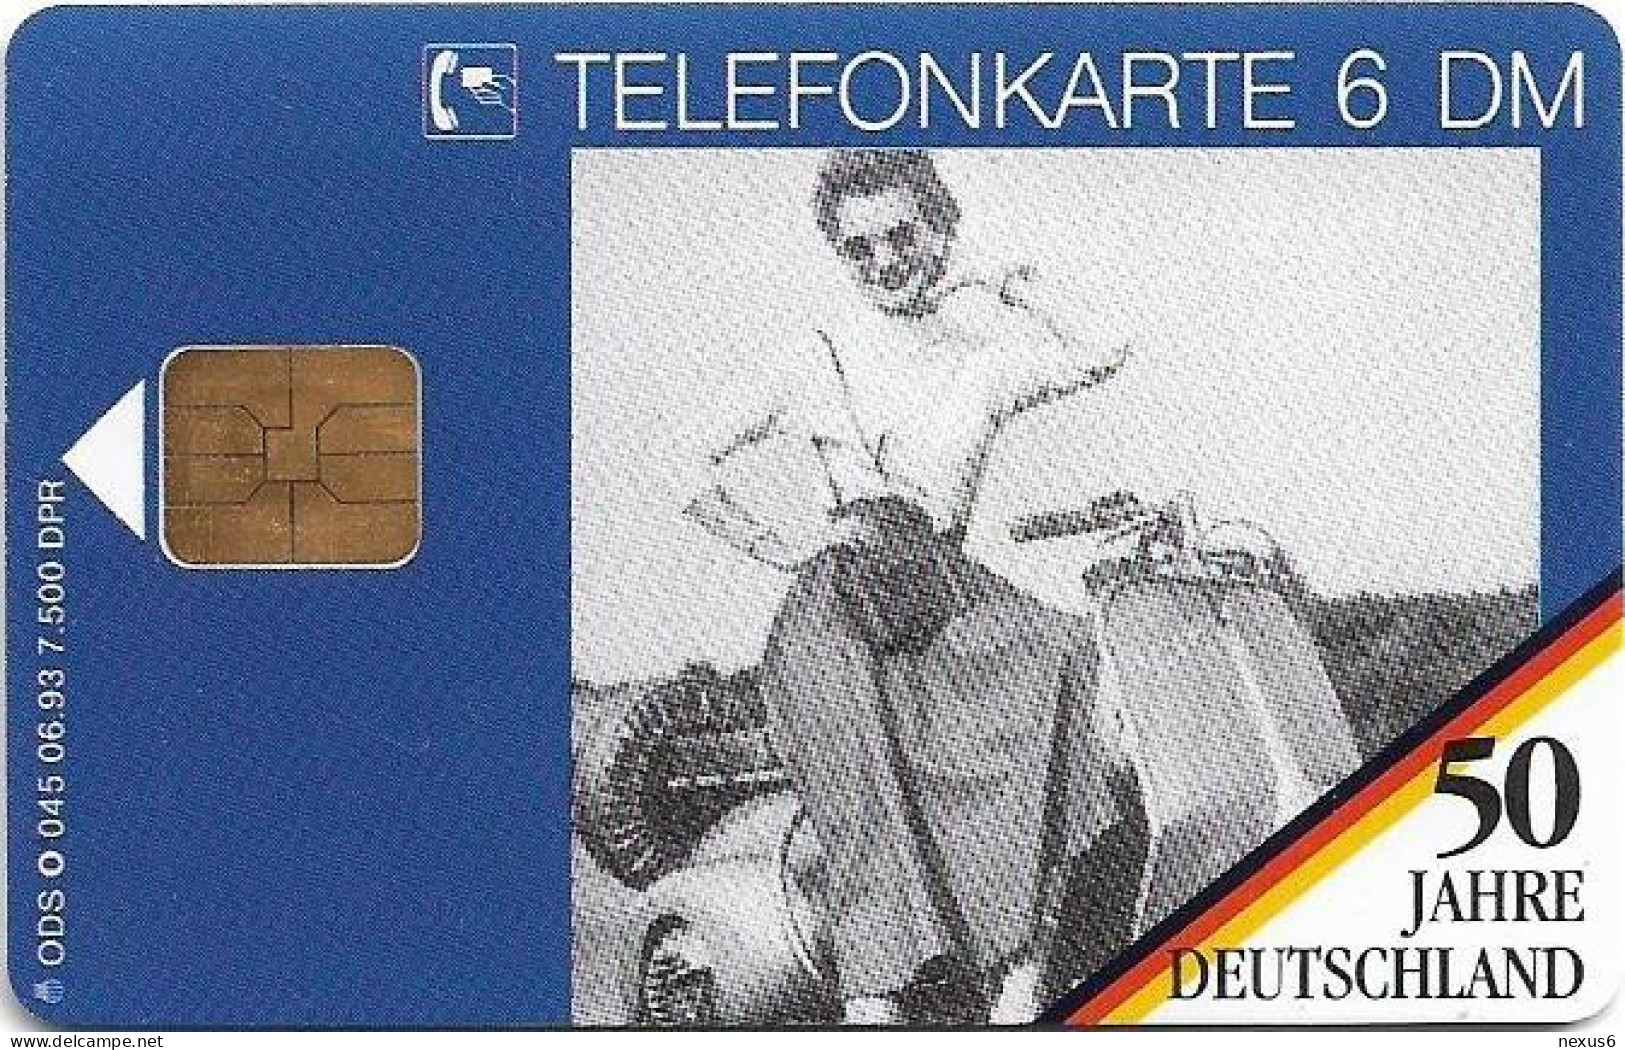 Germany - 50 Jahre Deutschland - Picknick Mit Motorroller 2 - O 0045 - 06.1993, 6DM, 7.500ex, Mint - O-Reeksen : Klantenreeksen